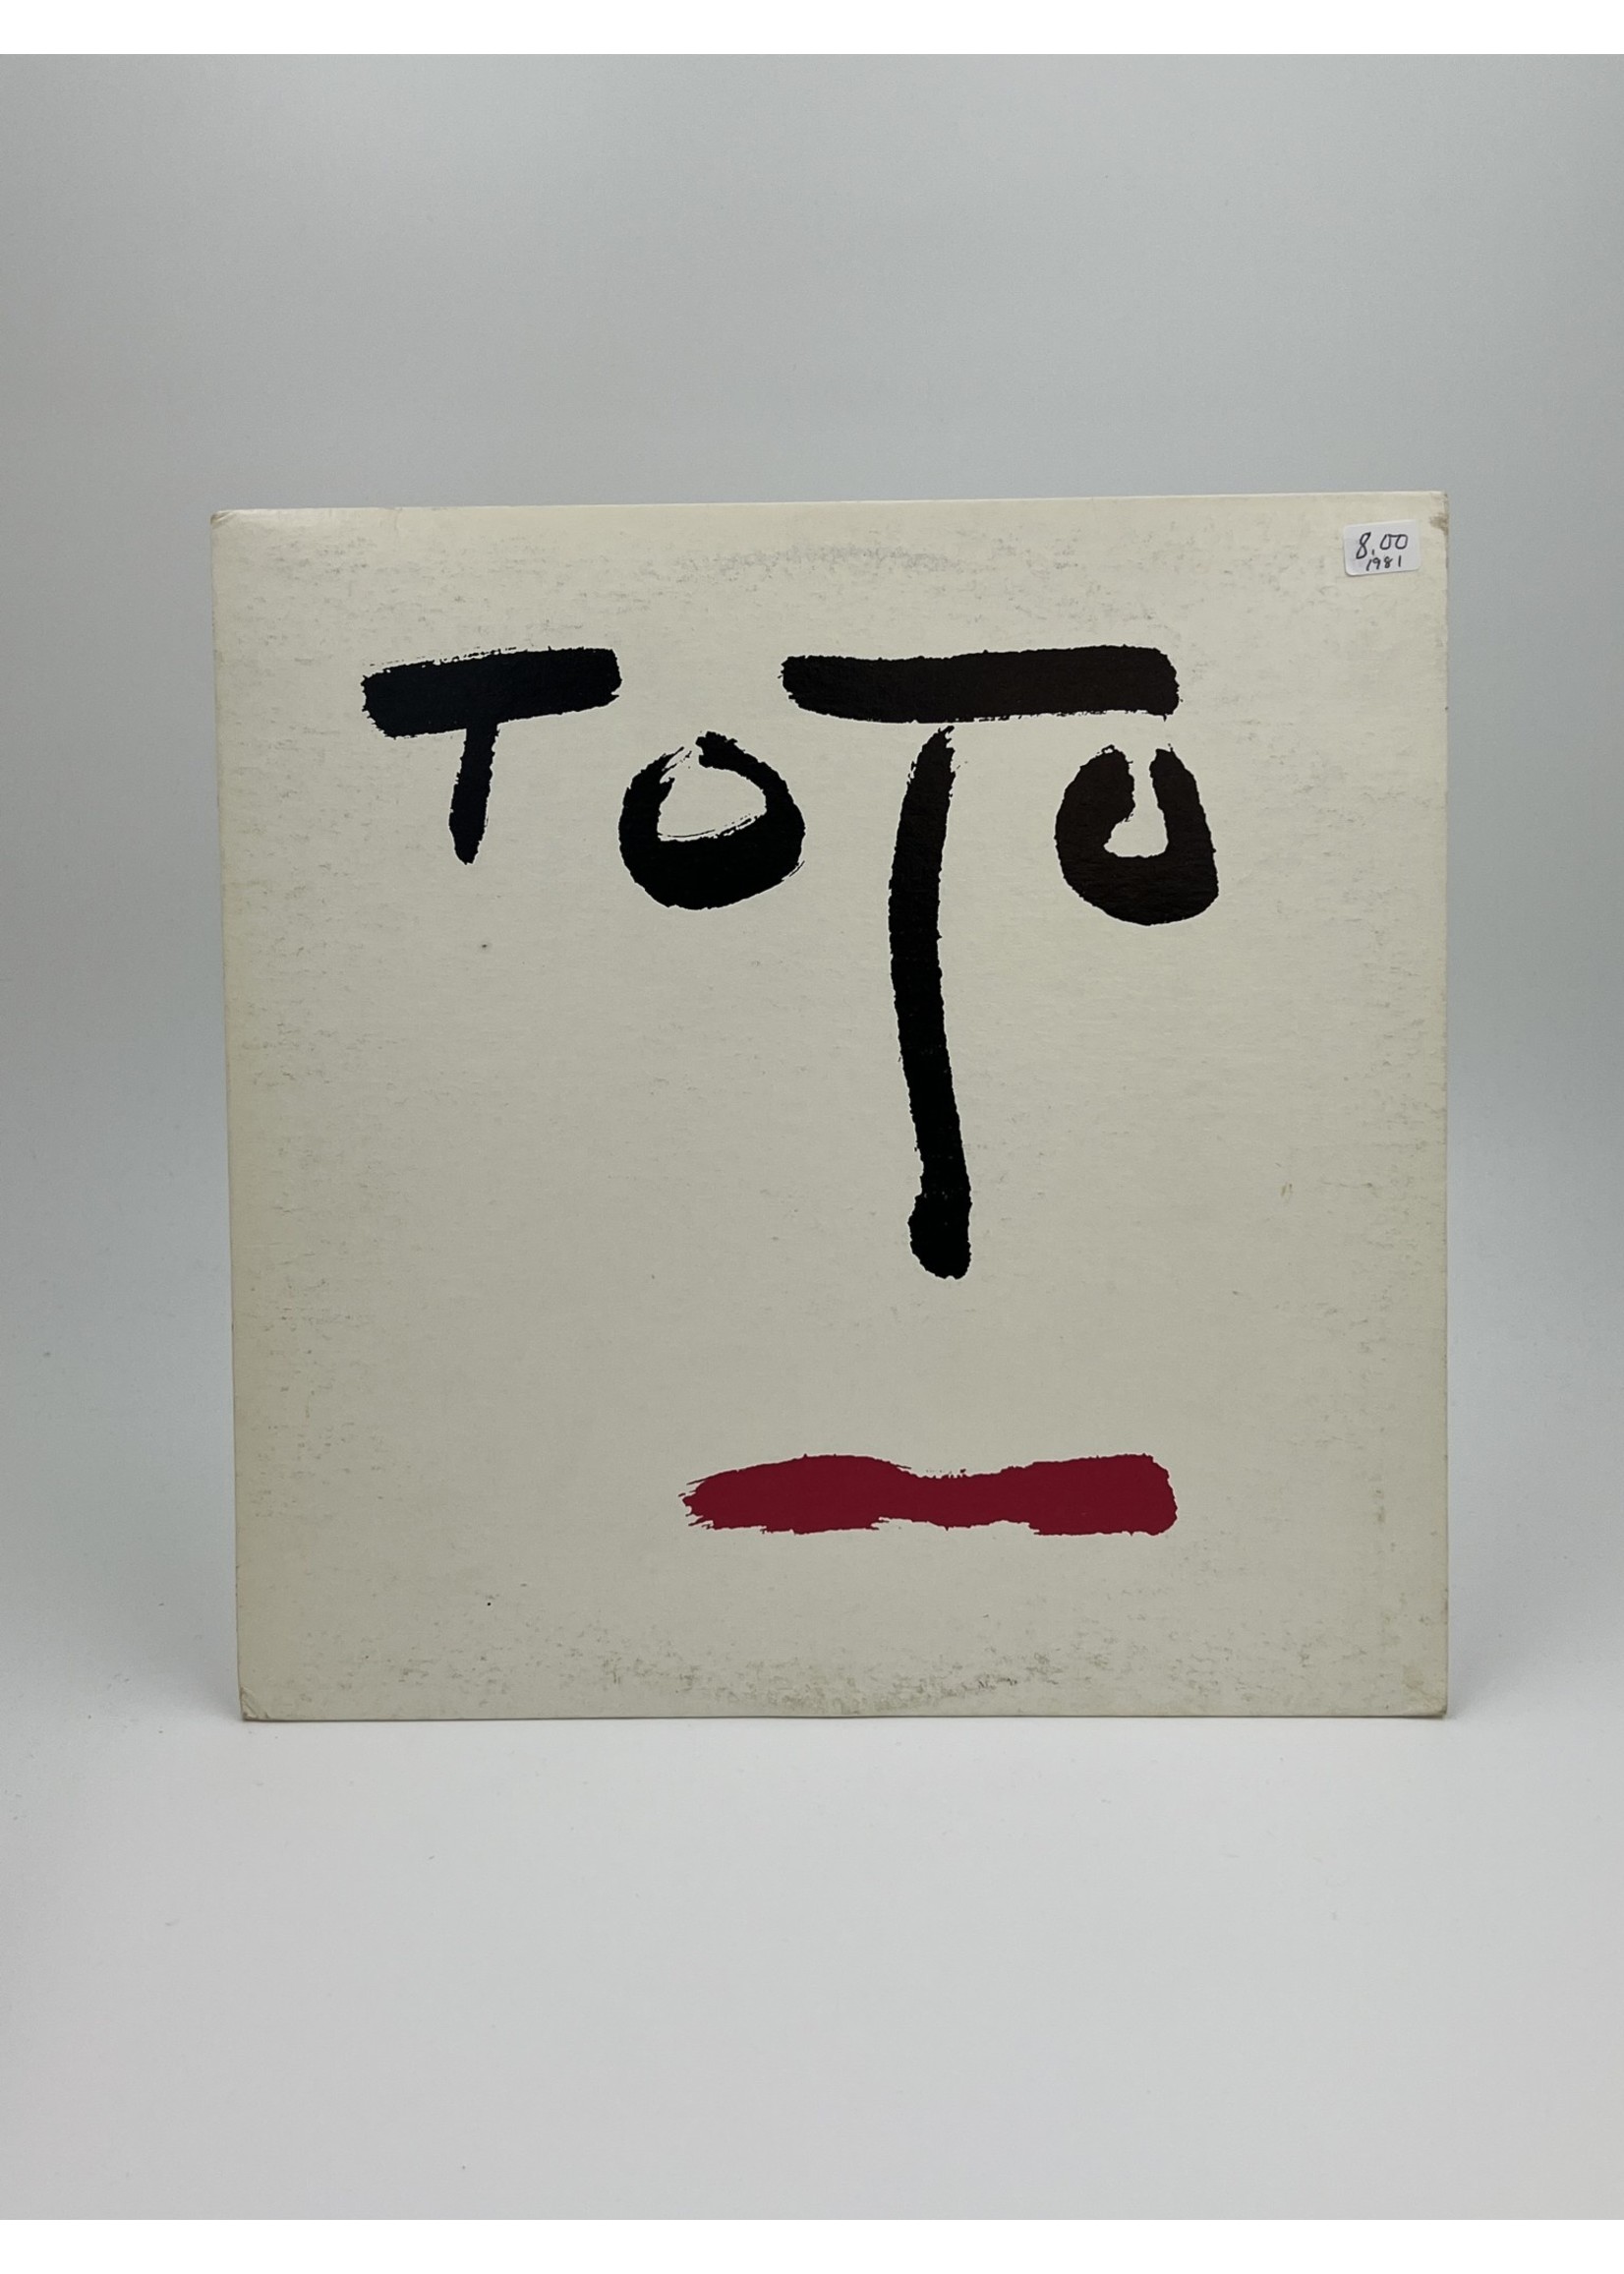 LP Toto Turn Back LP Record